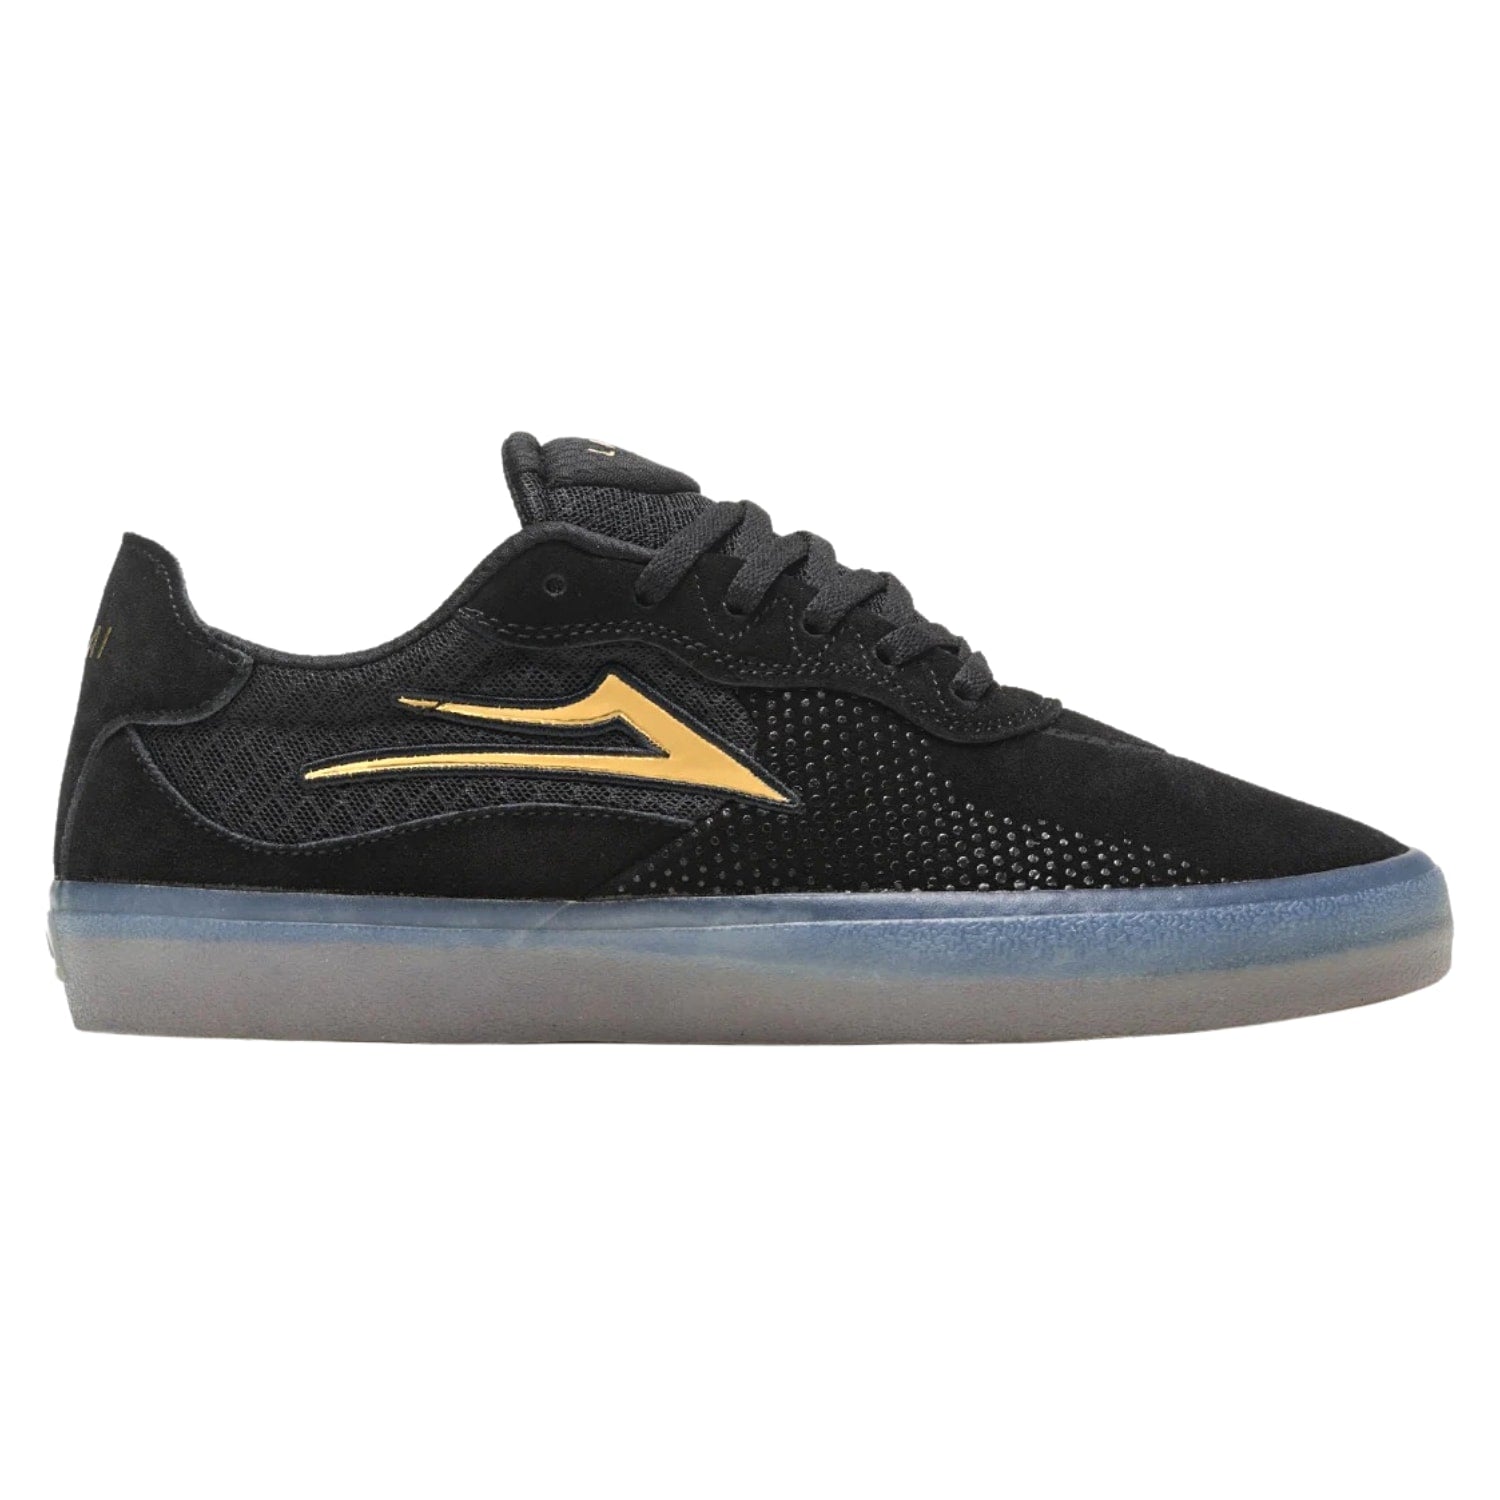 Lakai Essex Skate Shoes - Black/Gold Suede - Mens Skate Shoes by Lakai